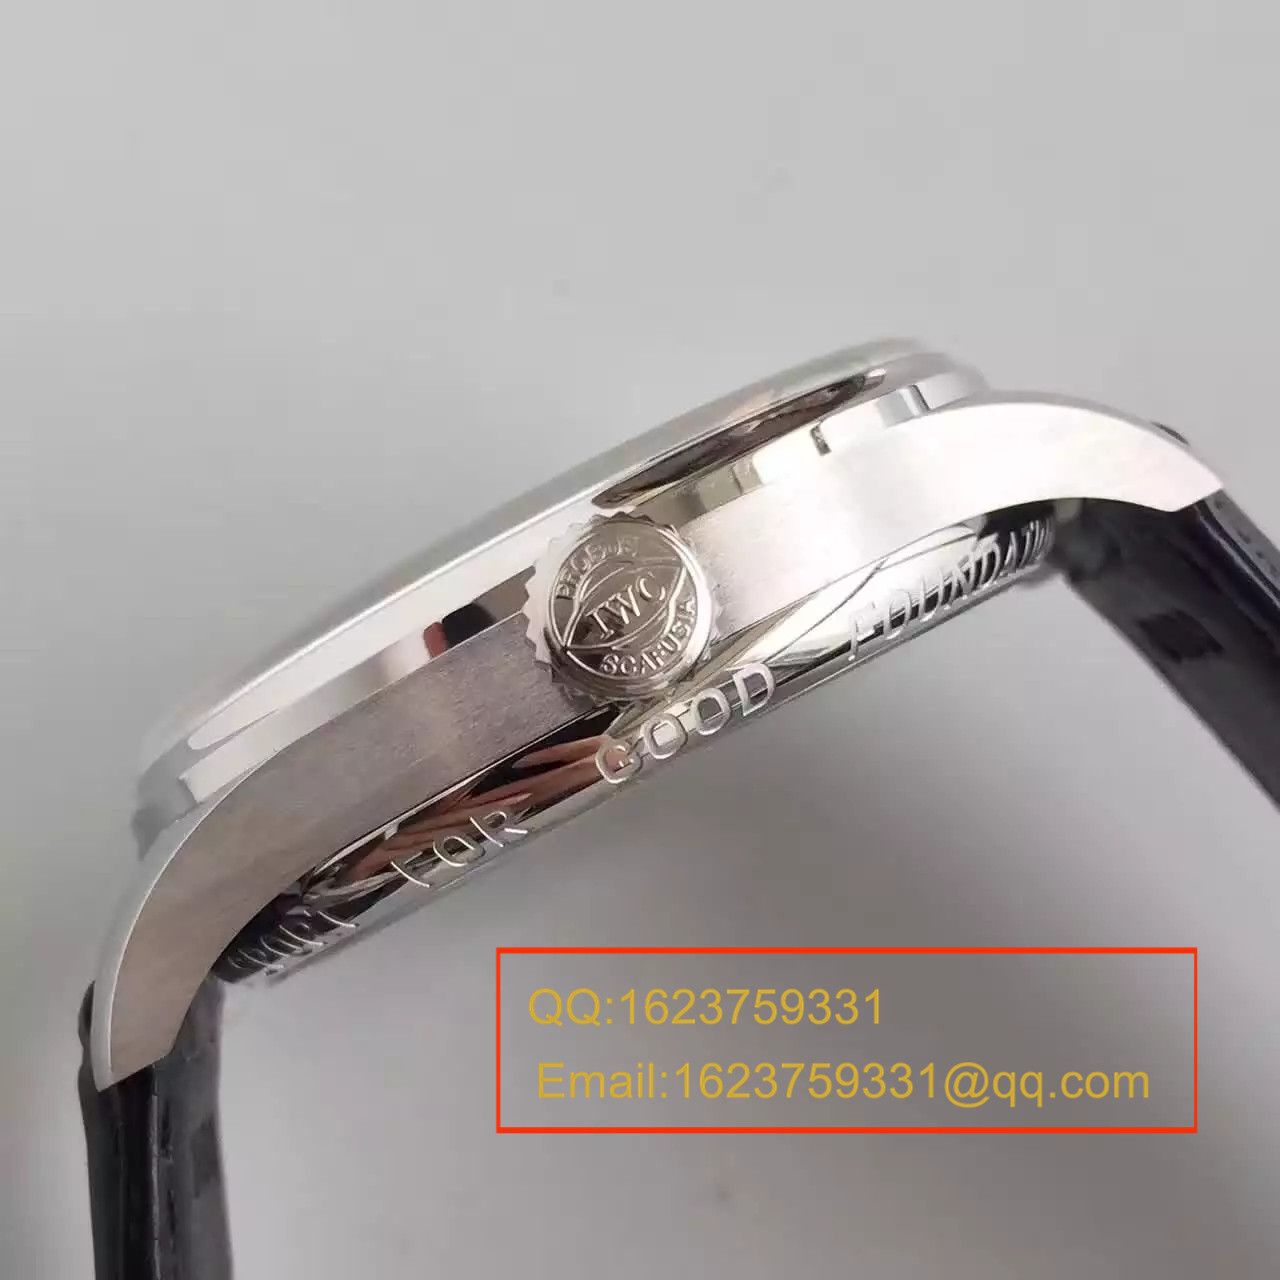 【YL厂顶级复刻手表】万国葡萄牙系列IW524204《万国三问》腕表 / WG235